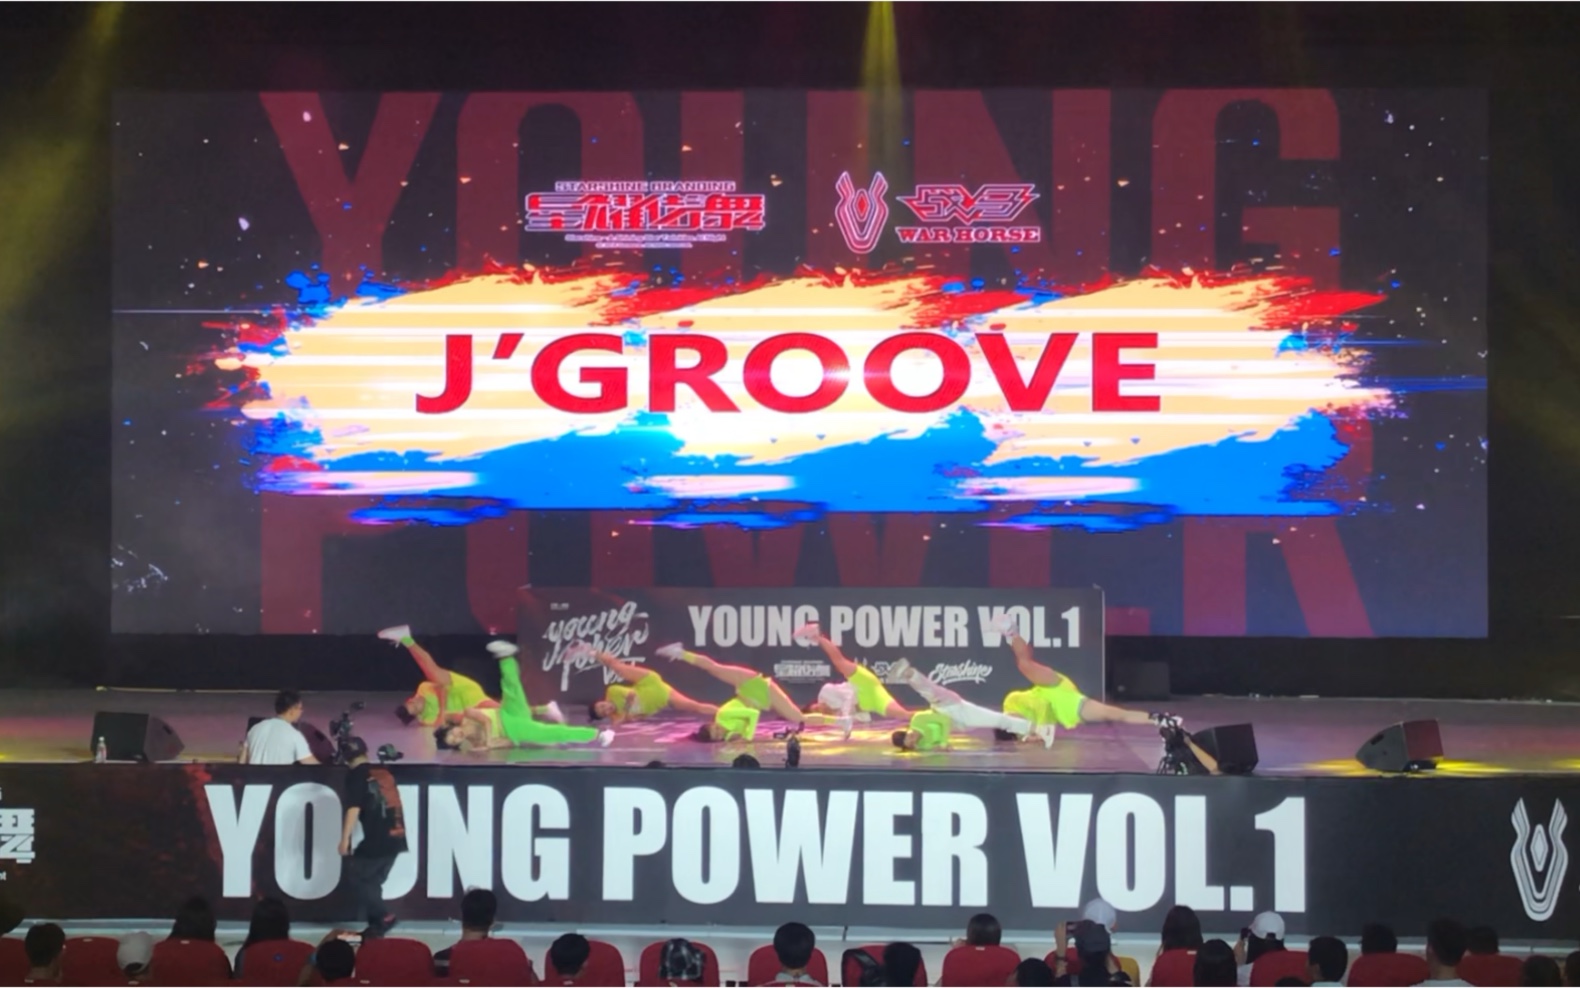 南京Young Power Vol.1 星耀街舞 J' groove